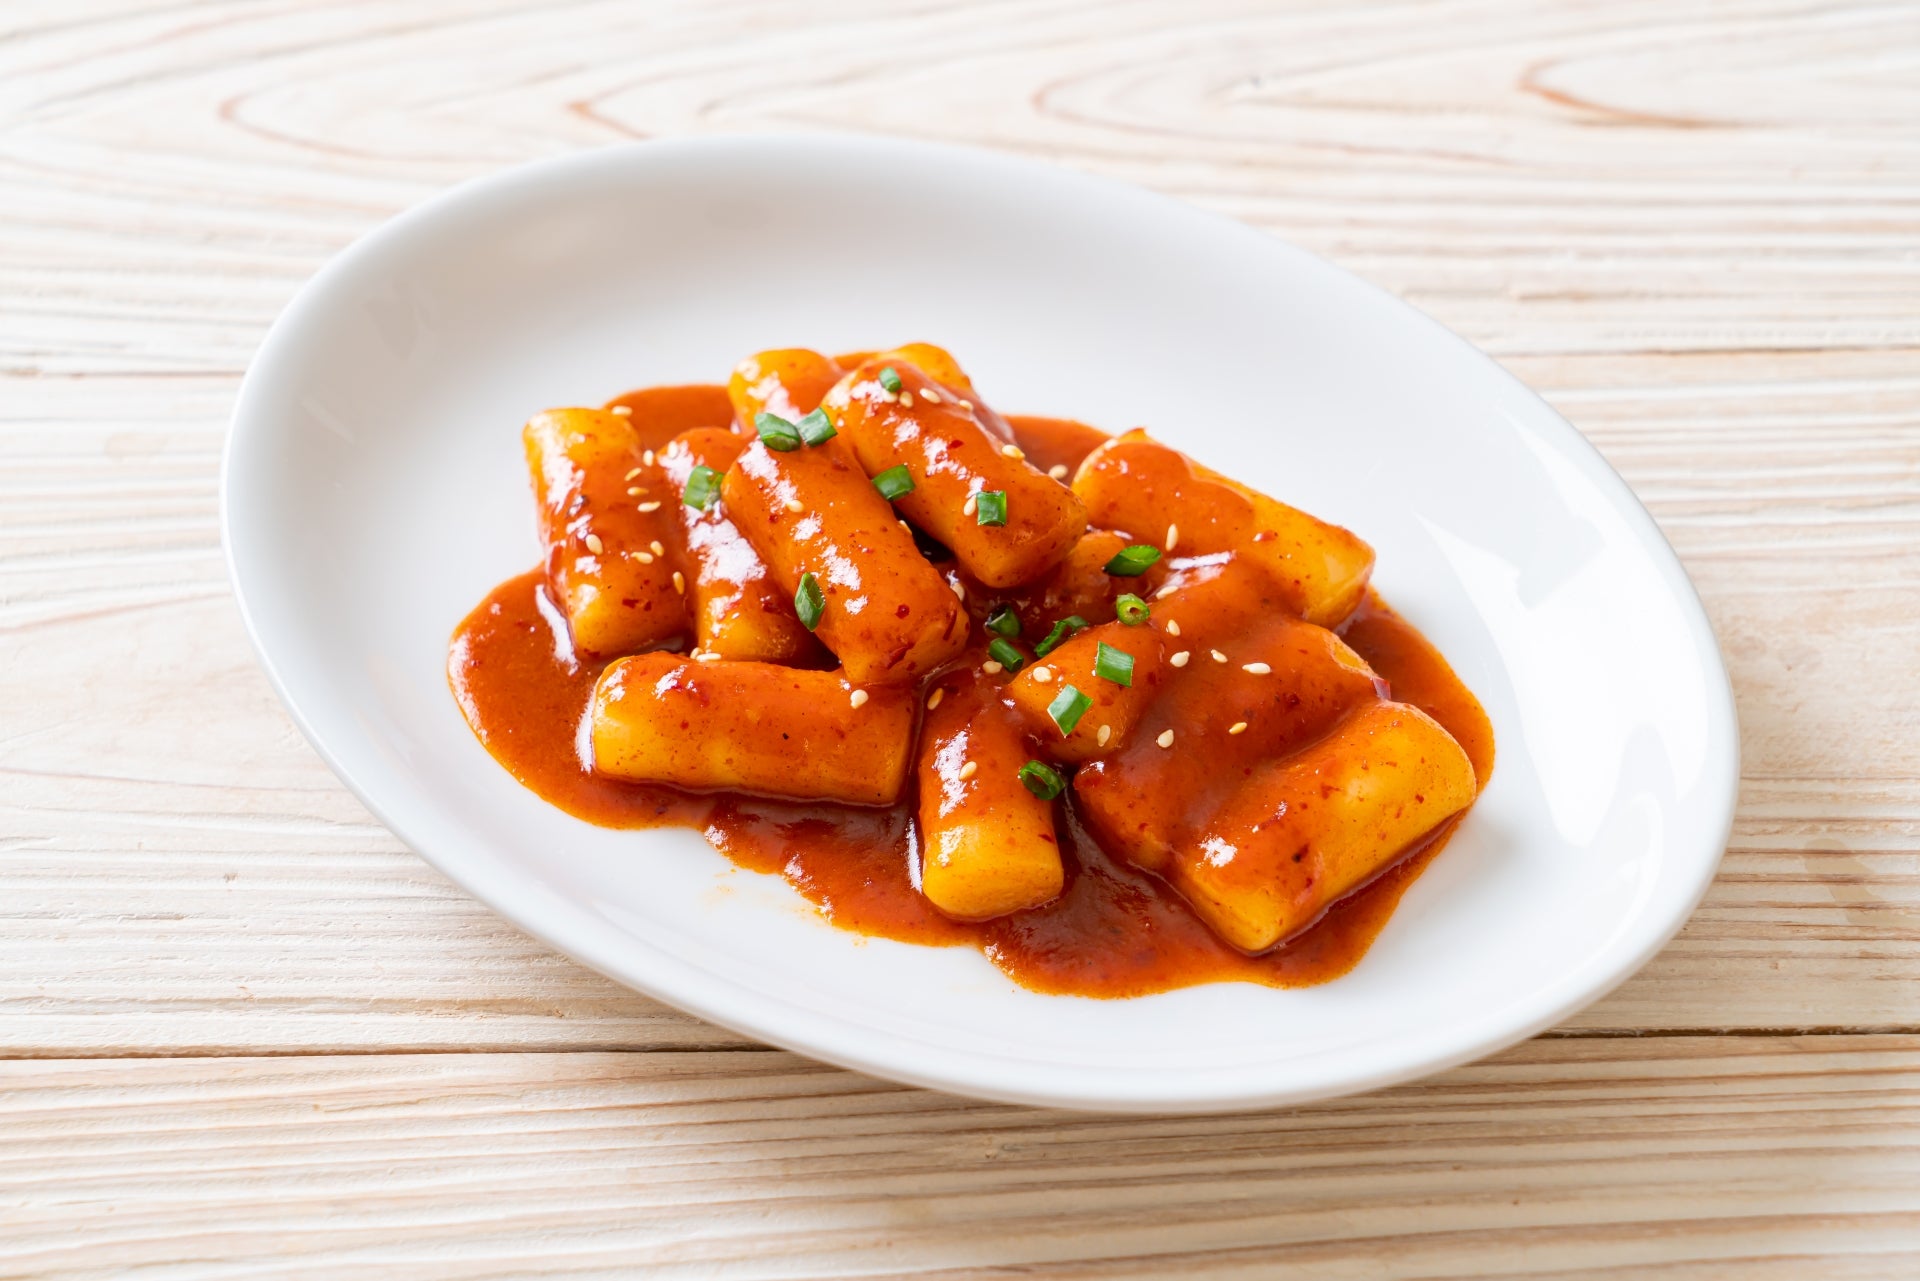 Vegan Tteokbokki 떡볶이 (Korean Spicy Rice Cakes) - eatwkriss